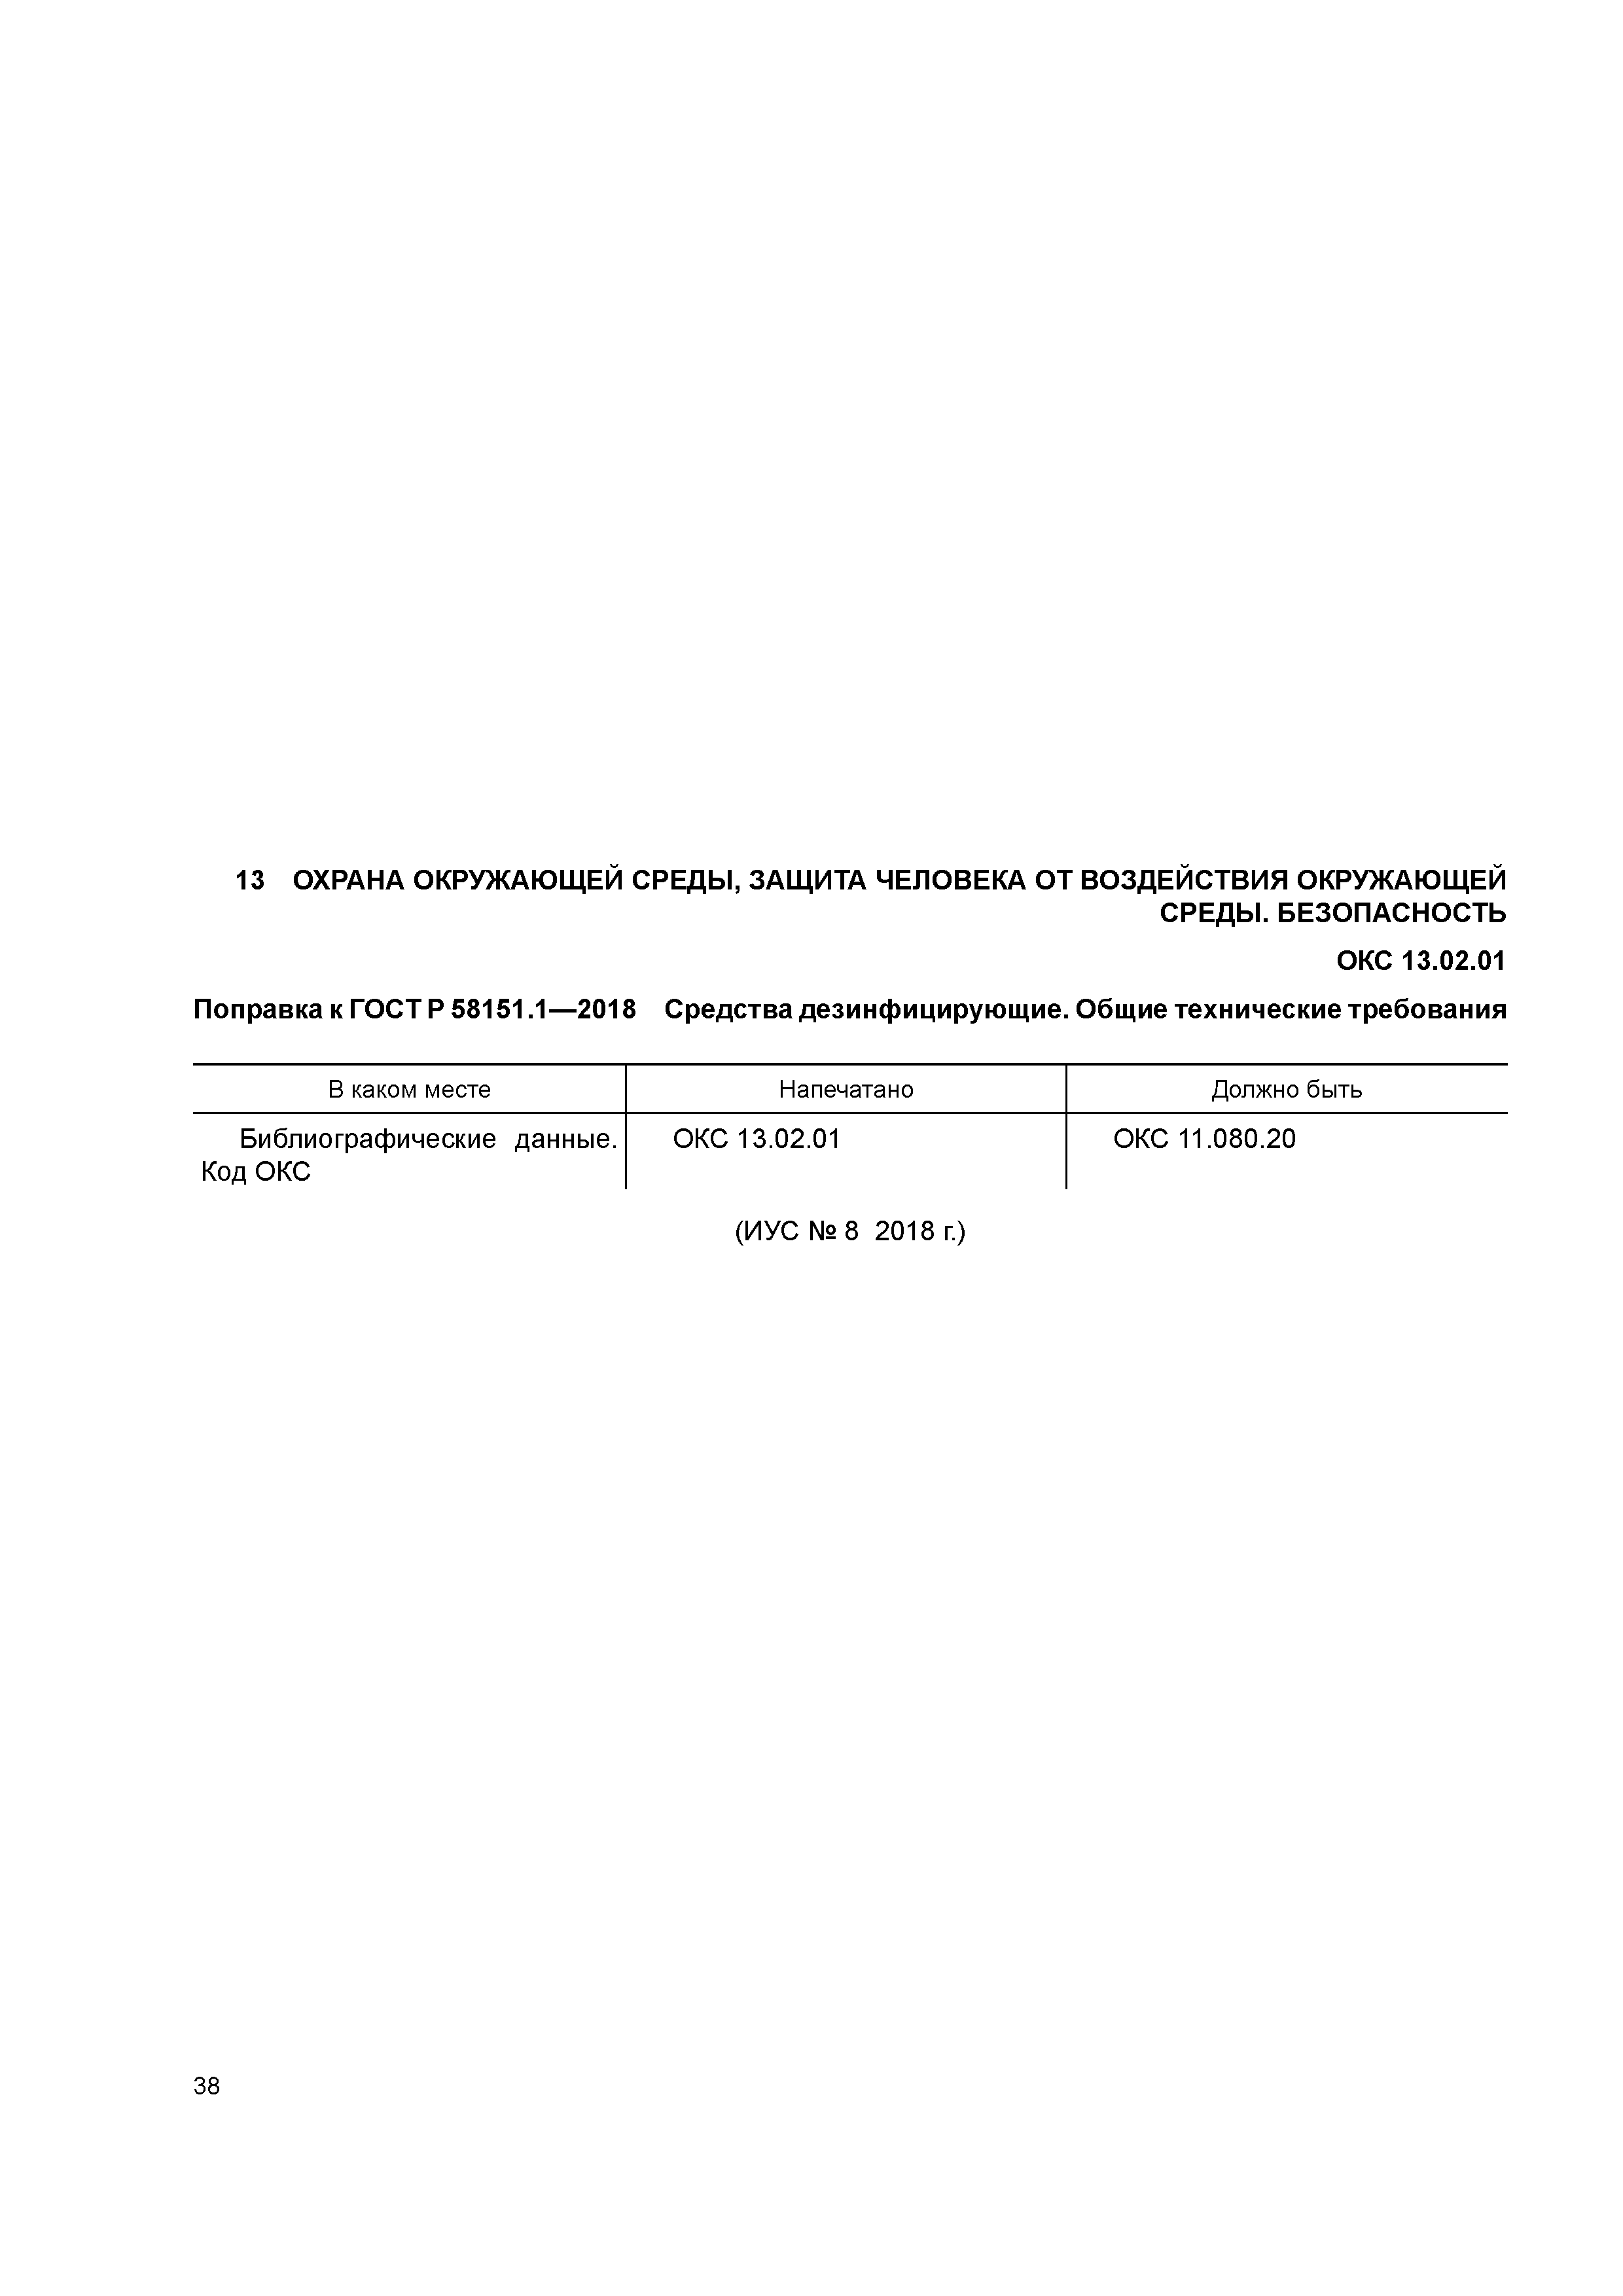 ГОСТ Р 58151.1-2018